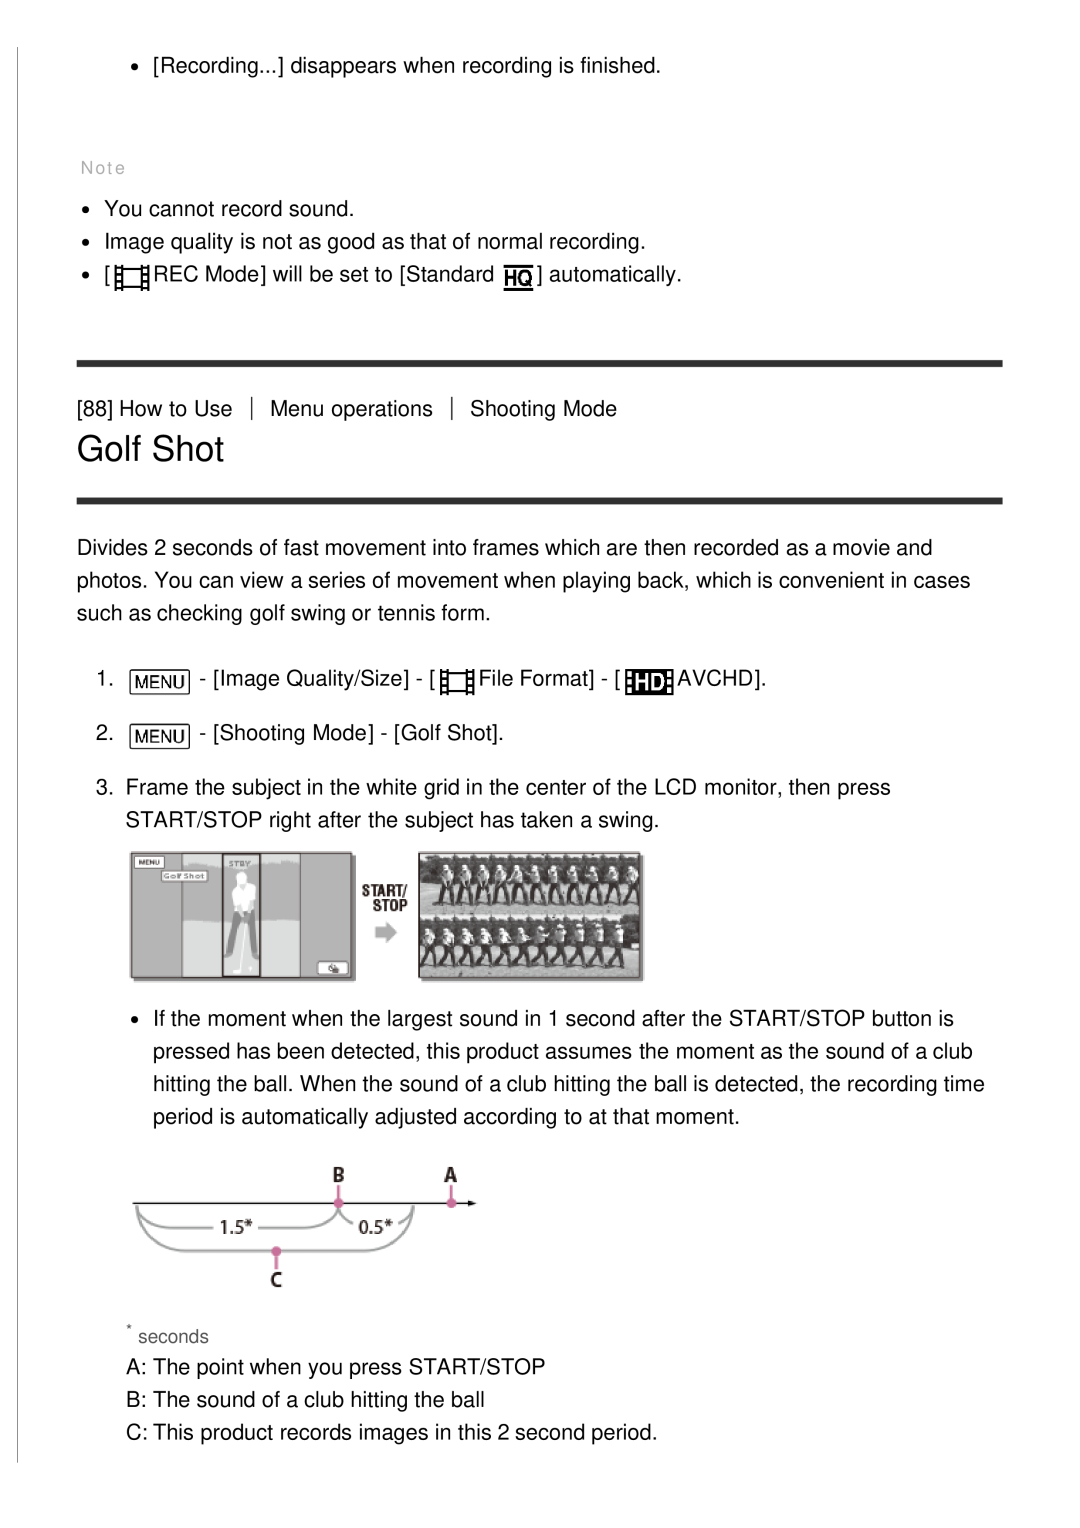 Sony HDR-CX900E, FDR-AX100E manual Golf Shot, seconds 